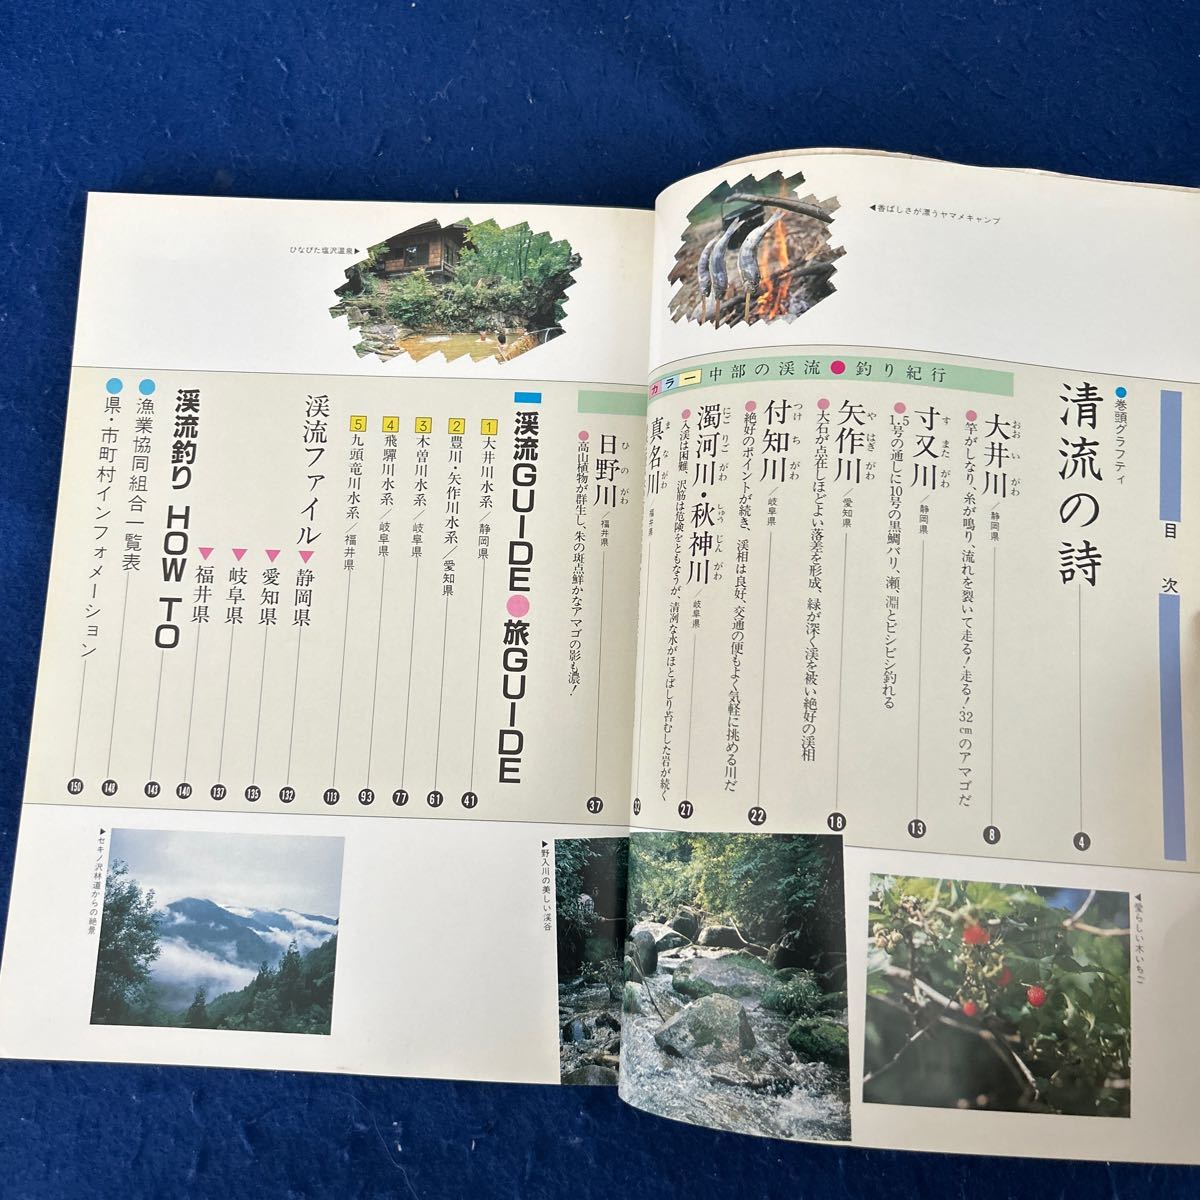 .. рыбалка . река. .6* Chuubu сборник 1* Shizuoka * Aichi * Gifu * Fukui * рыбалка * рыбалка *. гид 